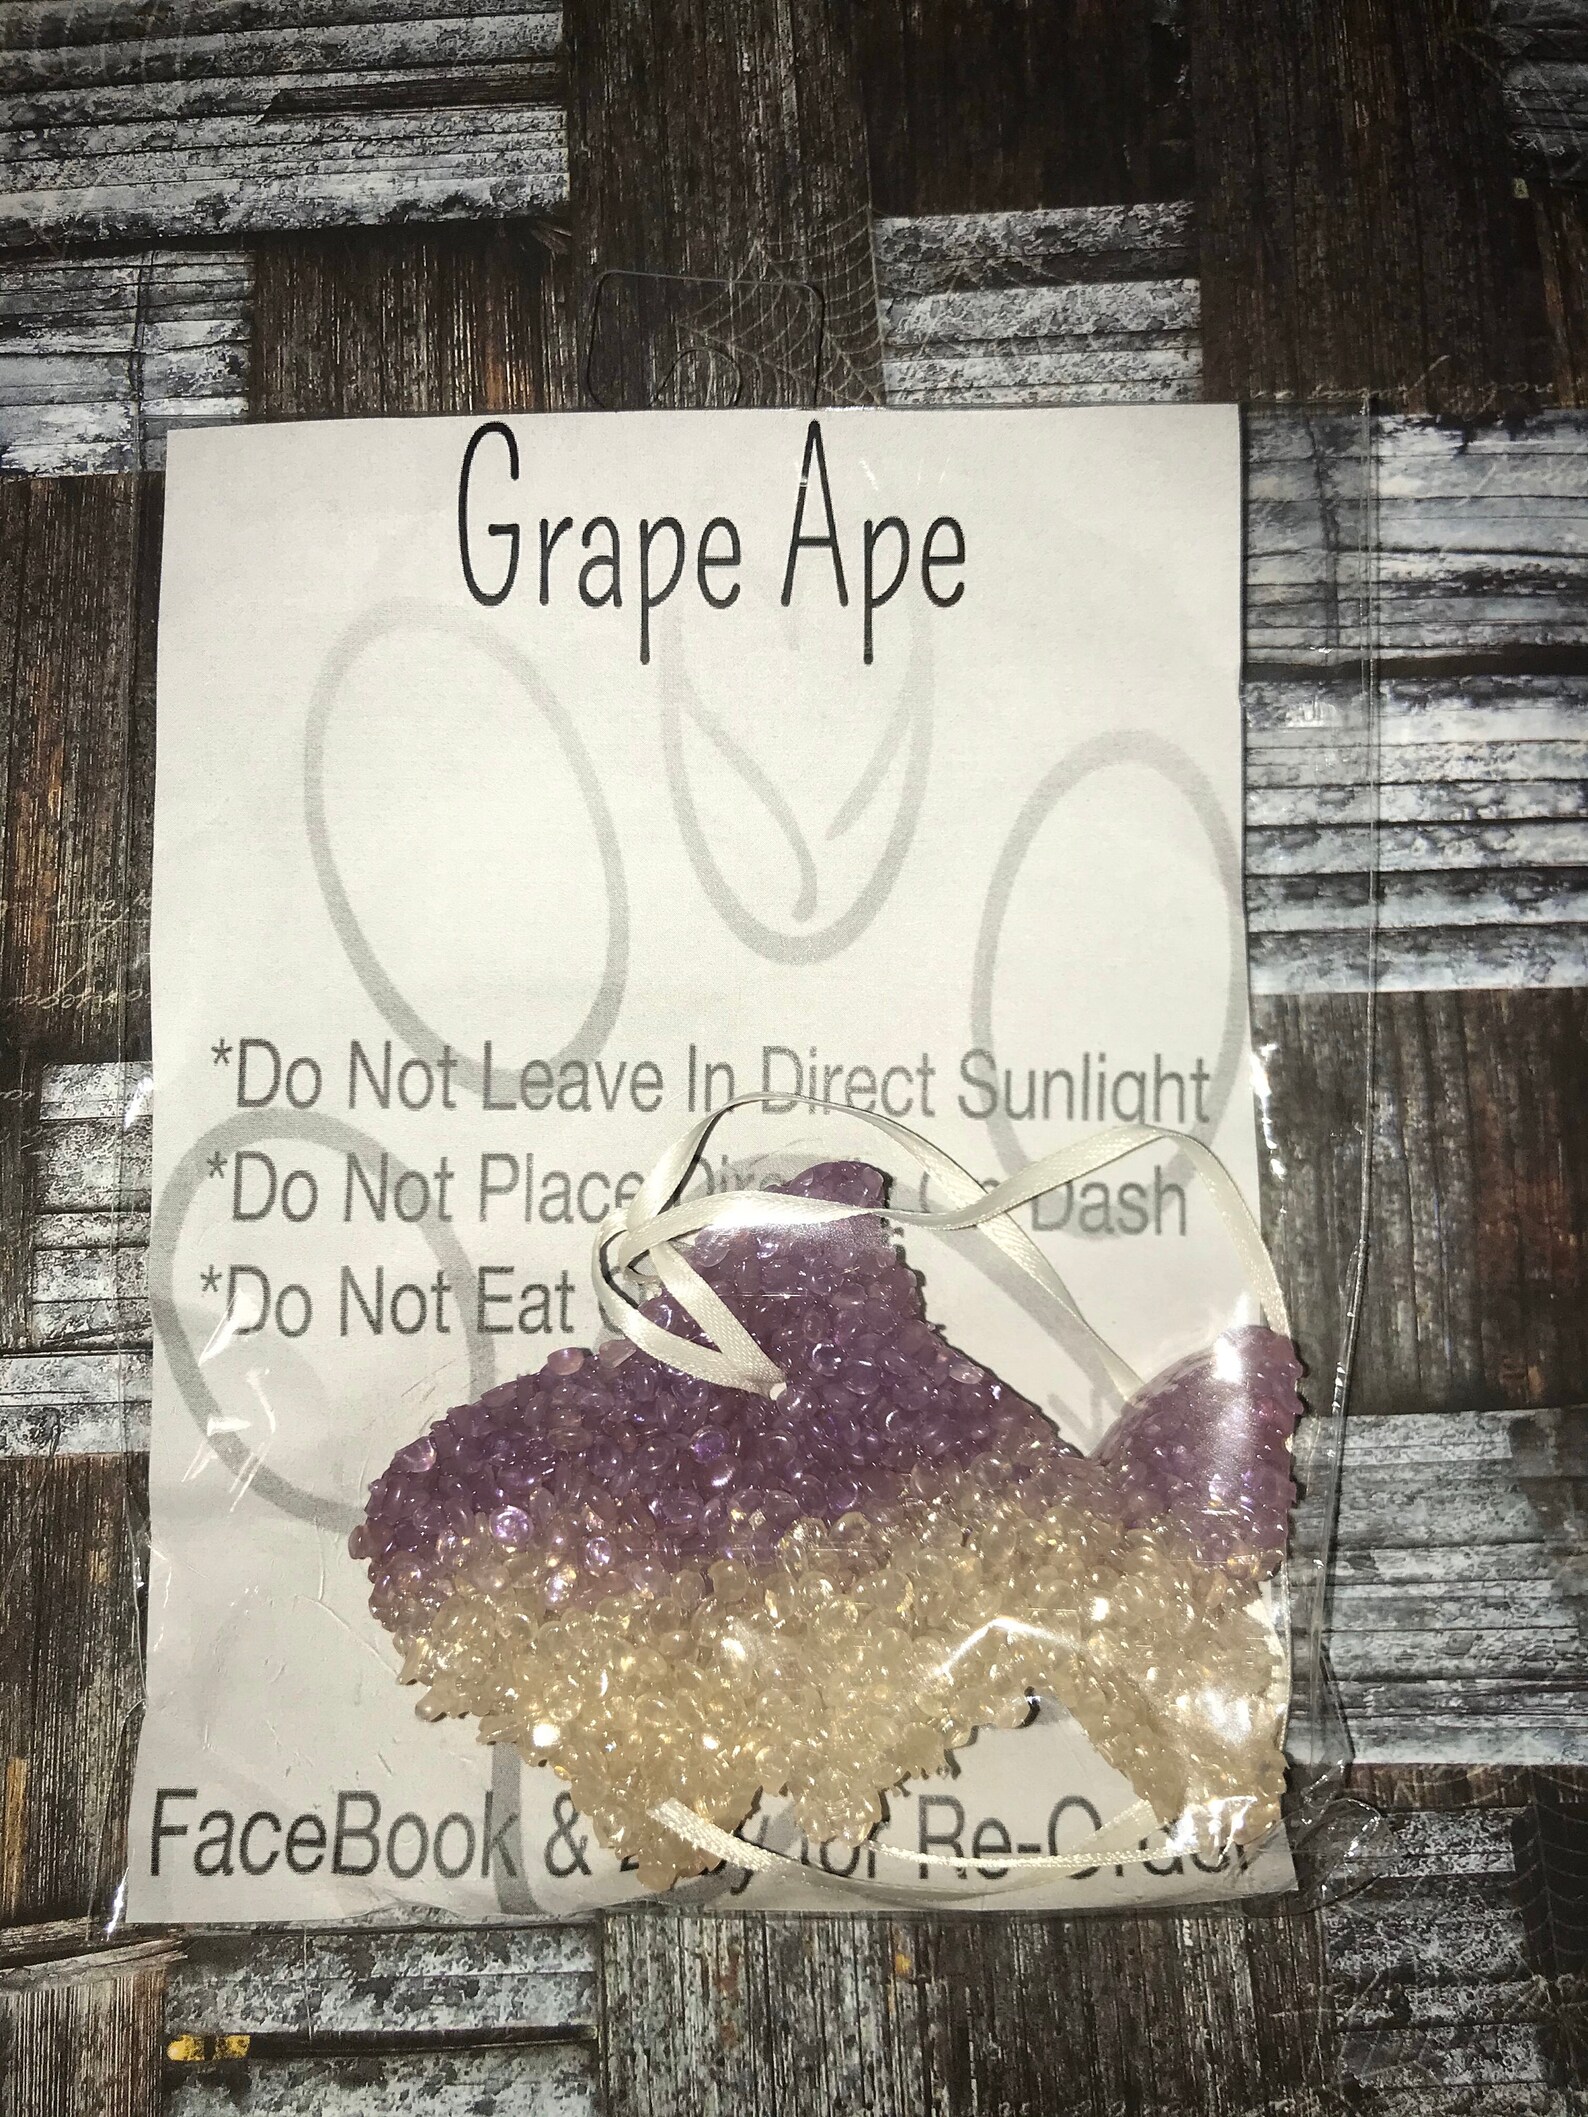 Grape Ape grape & Coconut Car Scented MI Air Freshner Etsy